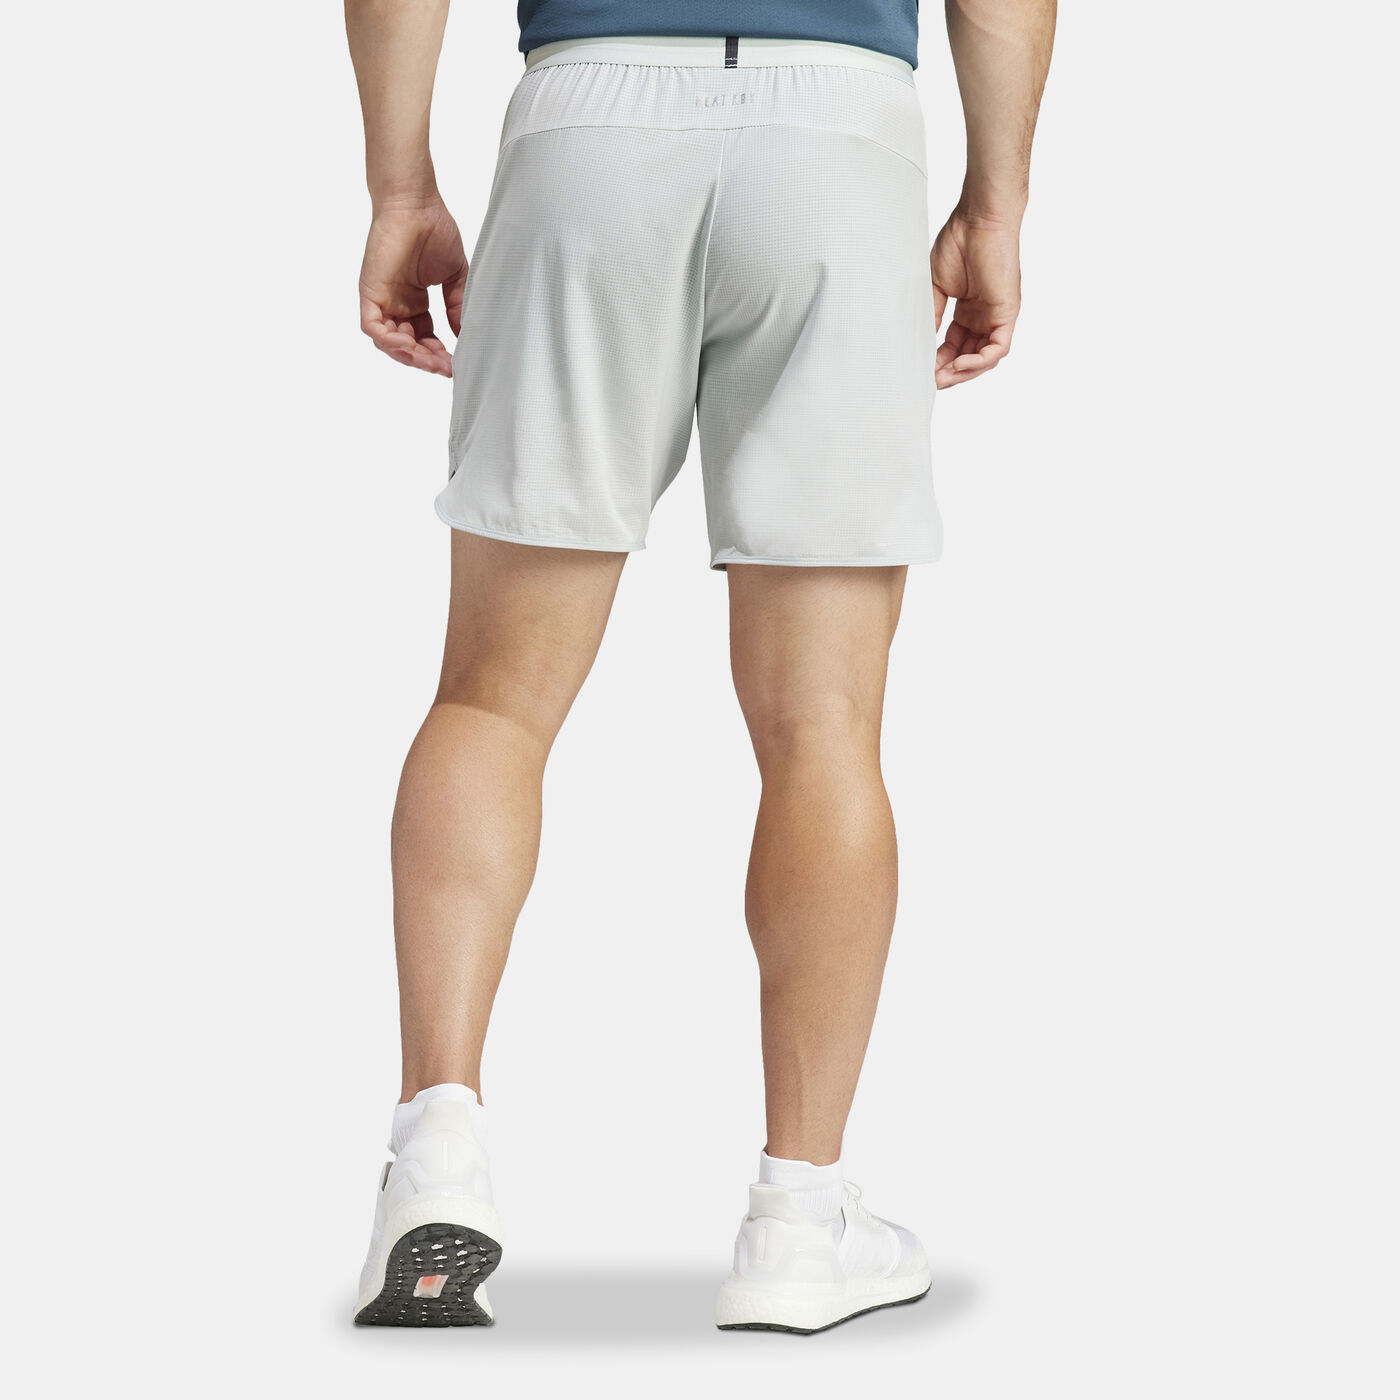 Men's Designed For Training HIIT Training Shorts